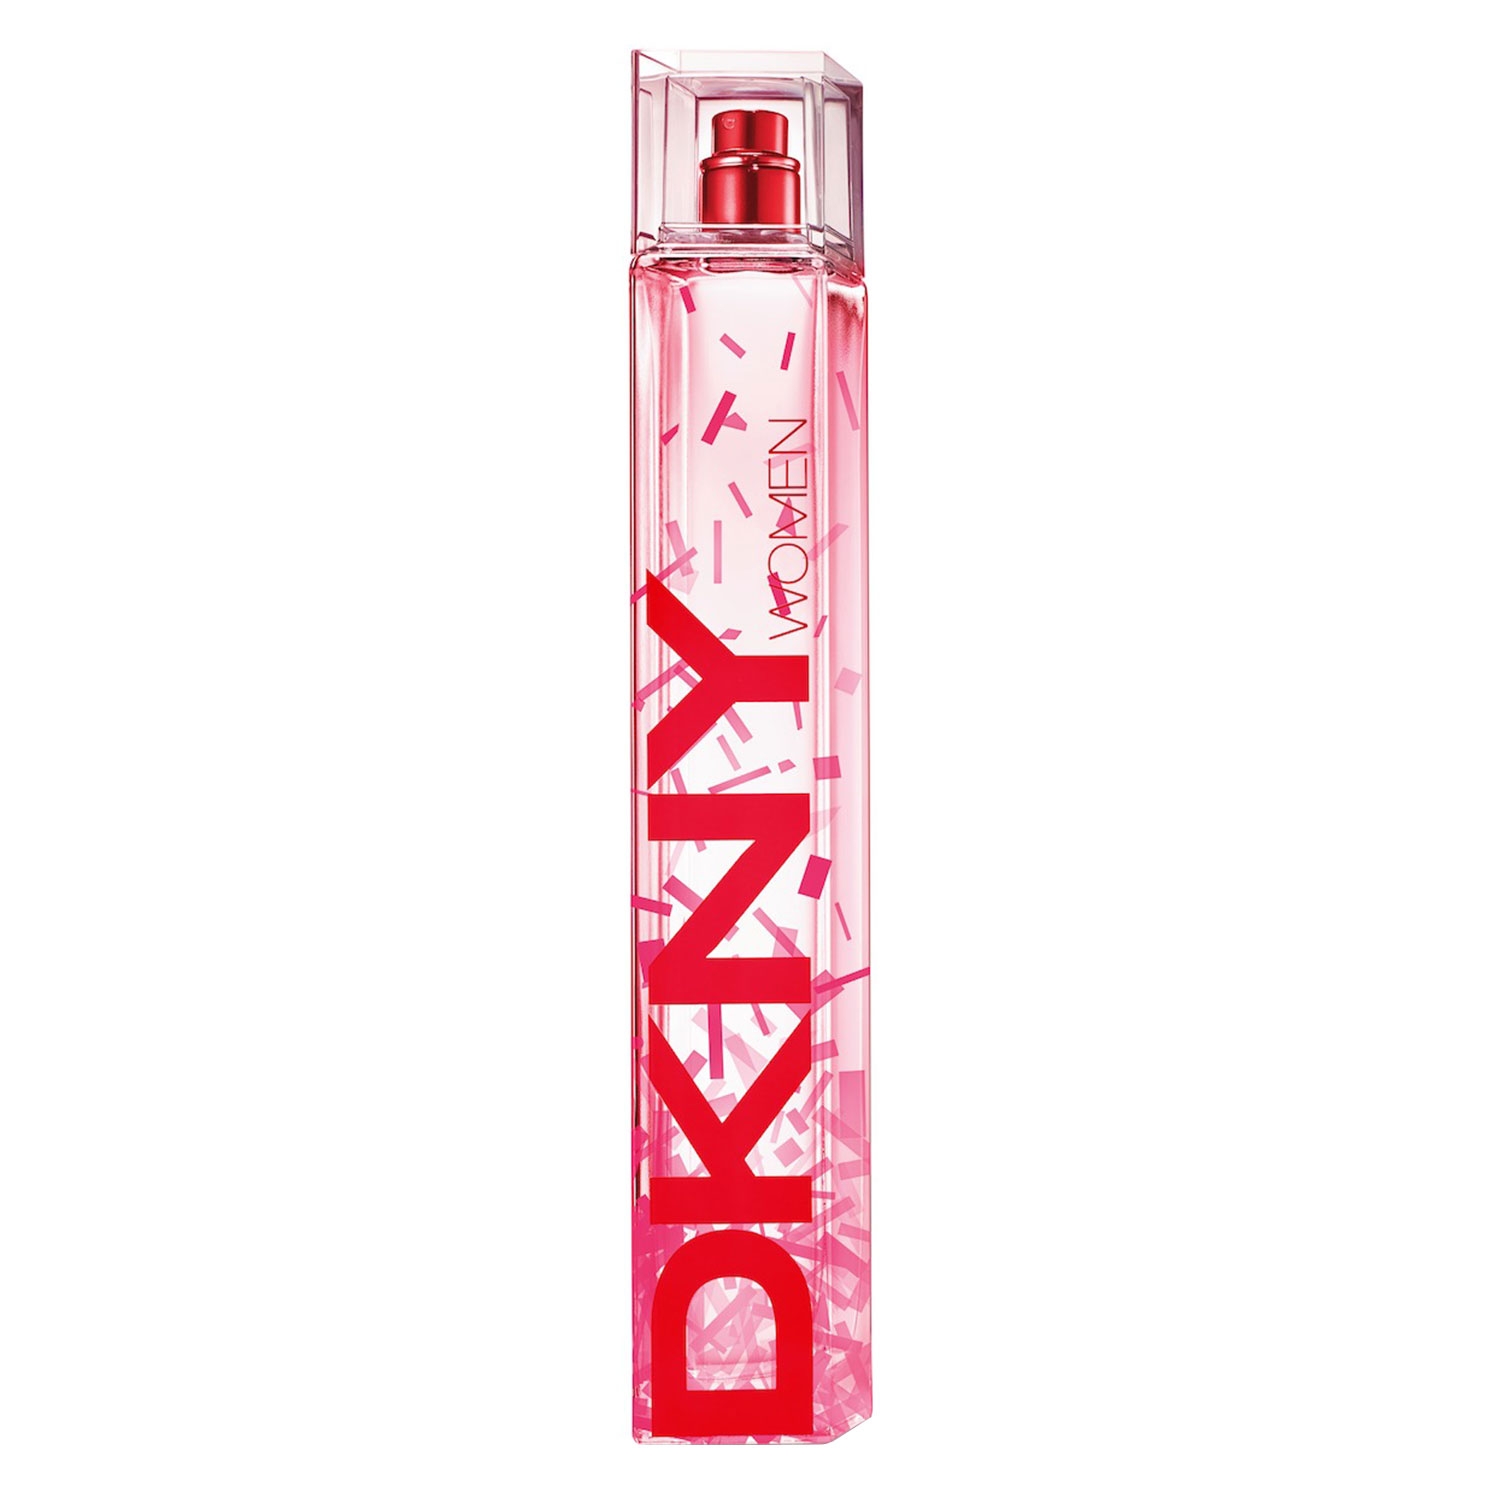 Produktbild von DKNY Women - Original Fall Woman Limited Edition